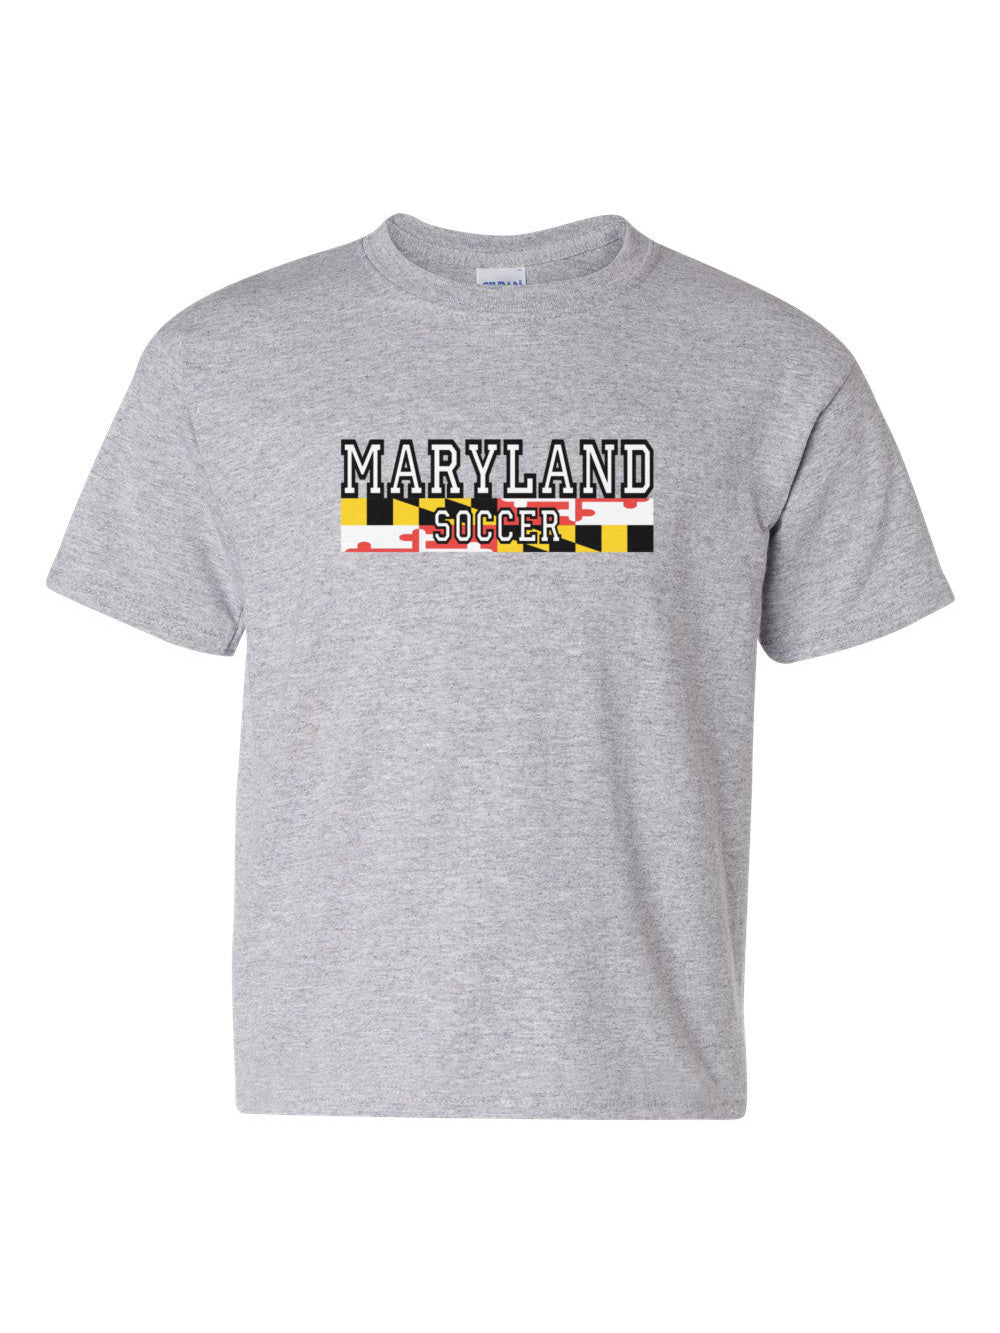 Maryland Soccer Youth T-Shirt (Grey)